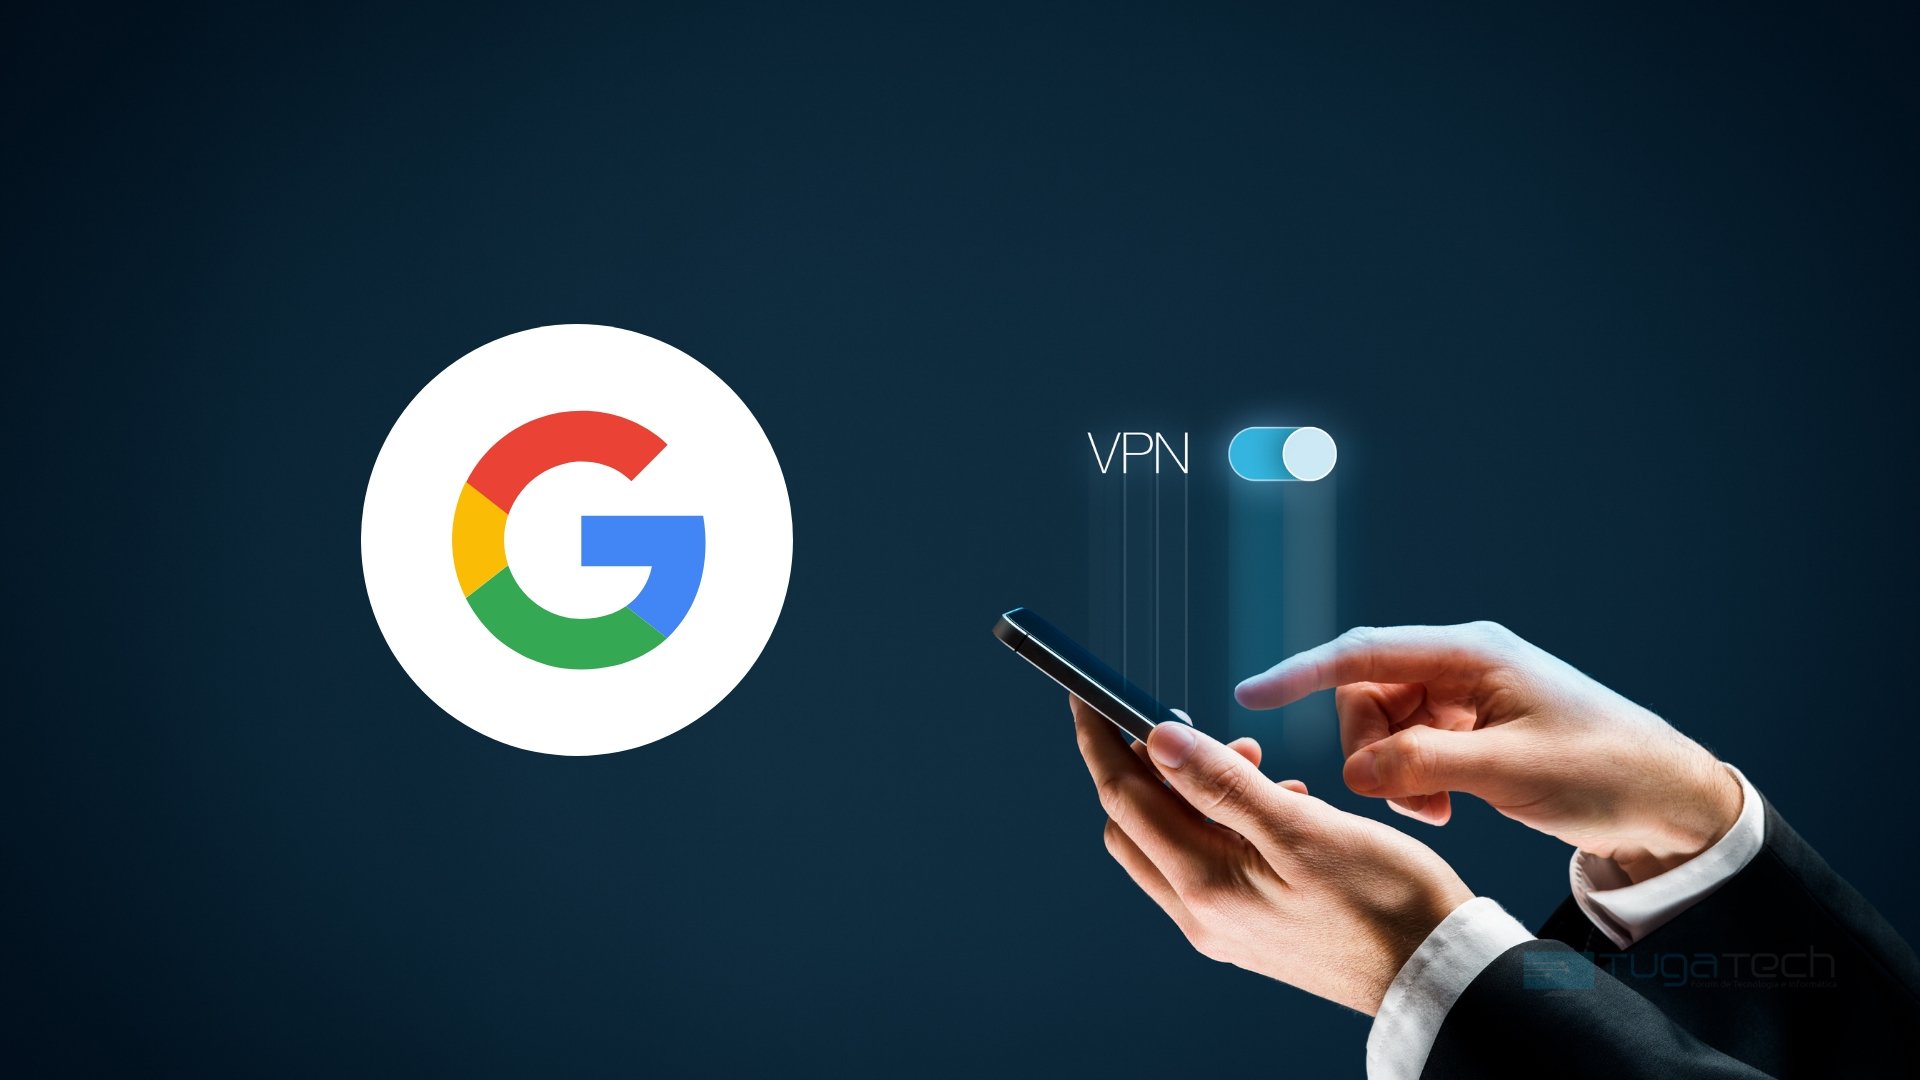 Google VPN